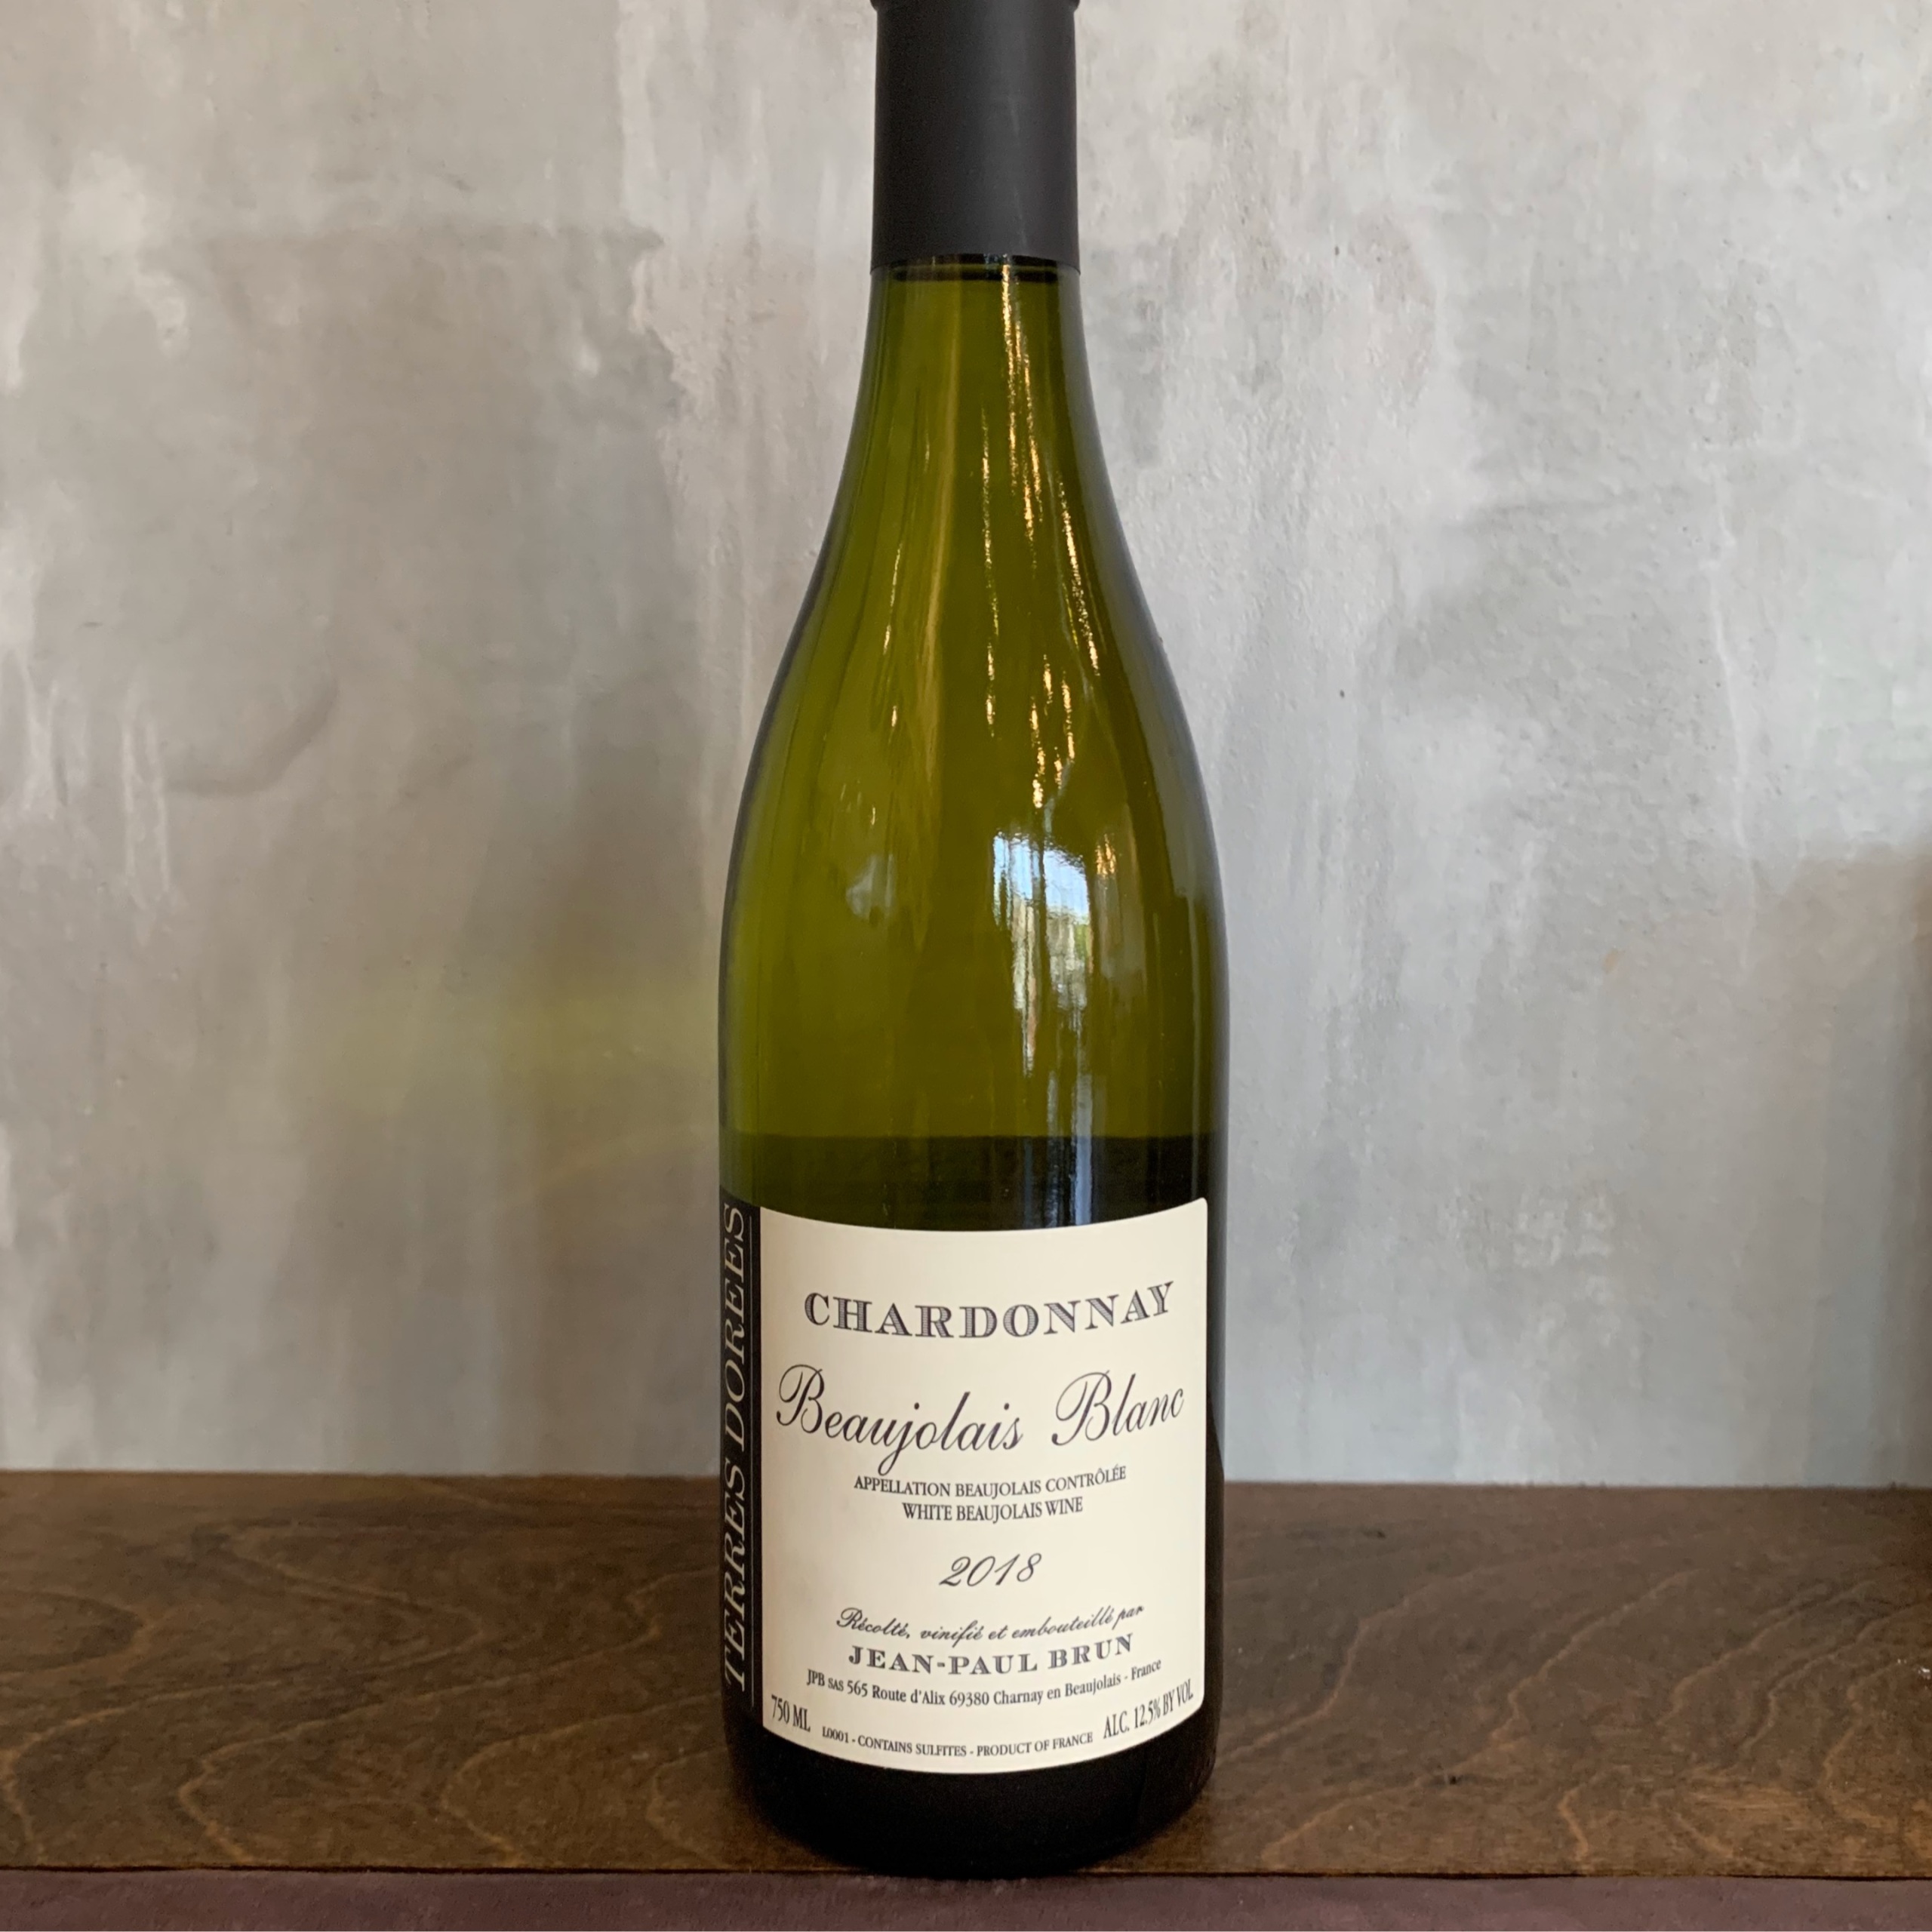 Chardonnay Terres Dorées, Beaujolais Blanc Chardonnay France 2018 ...